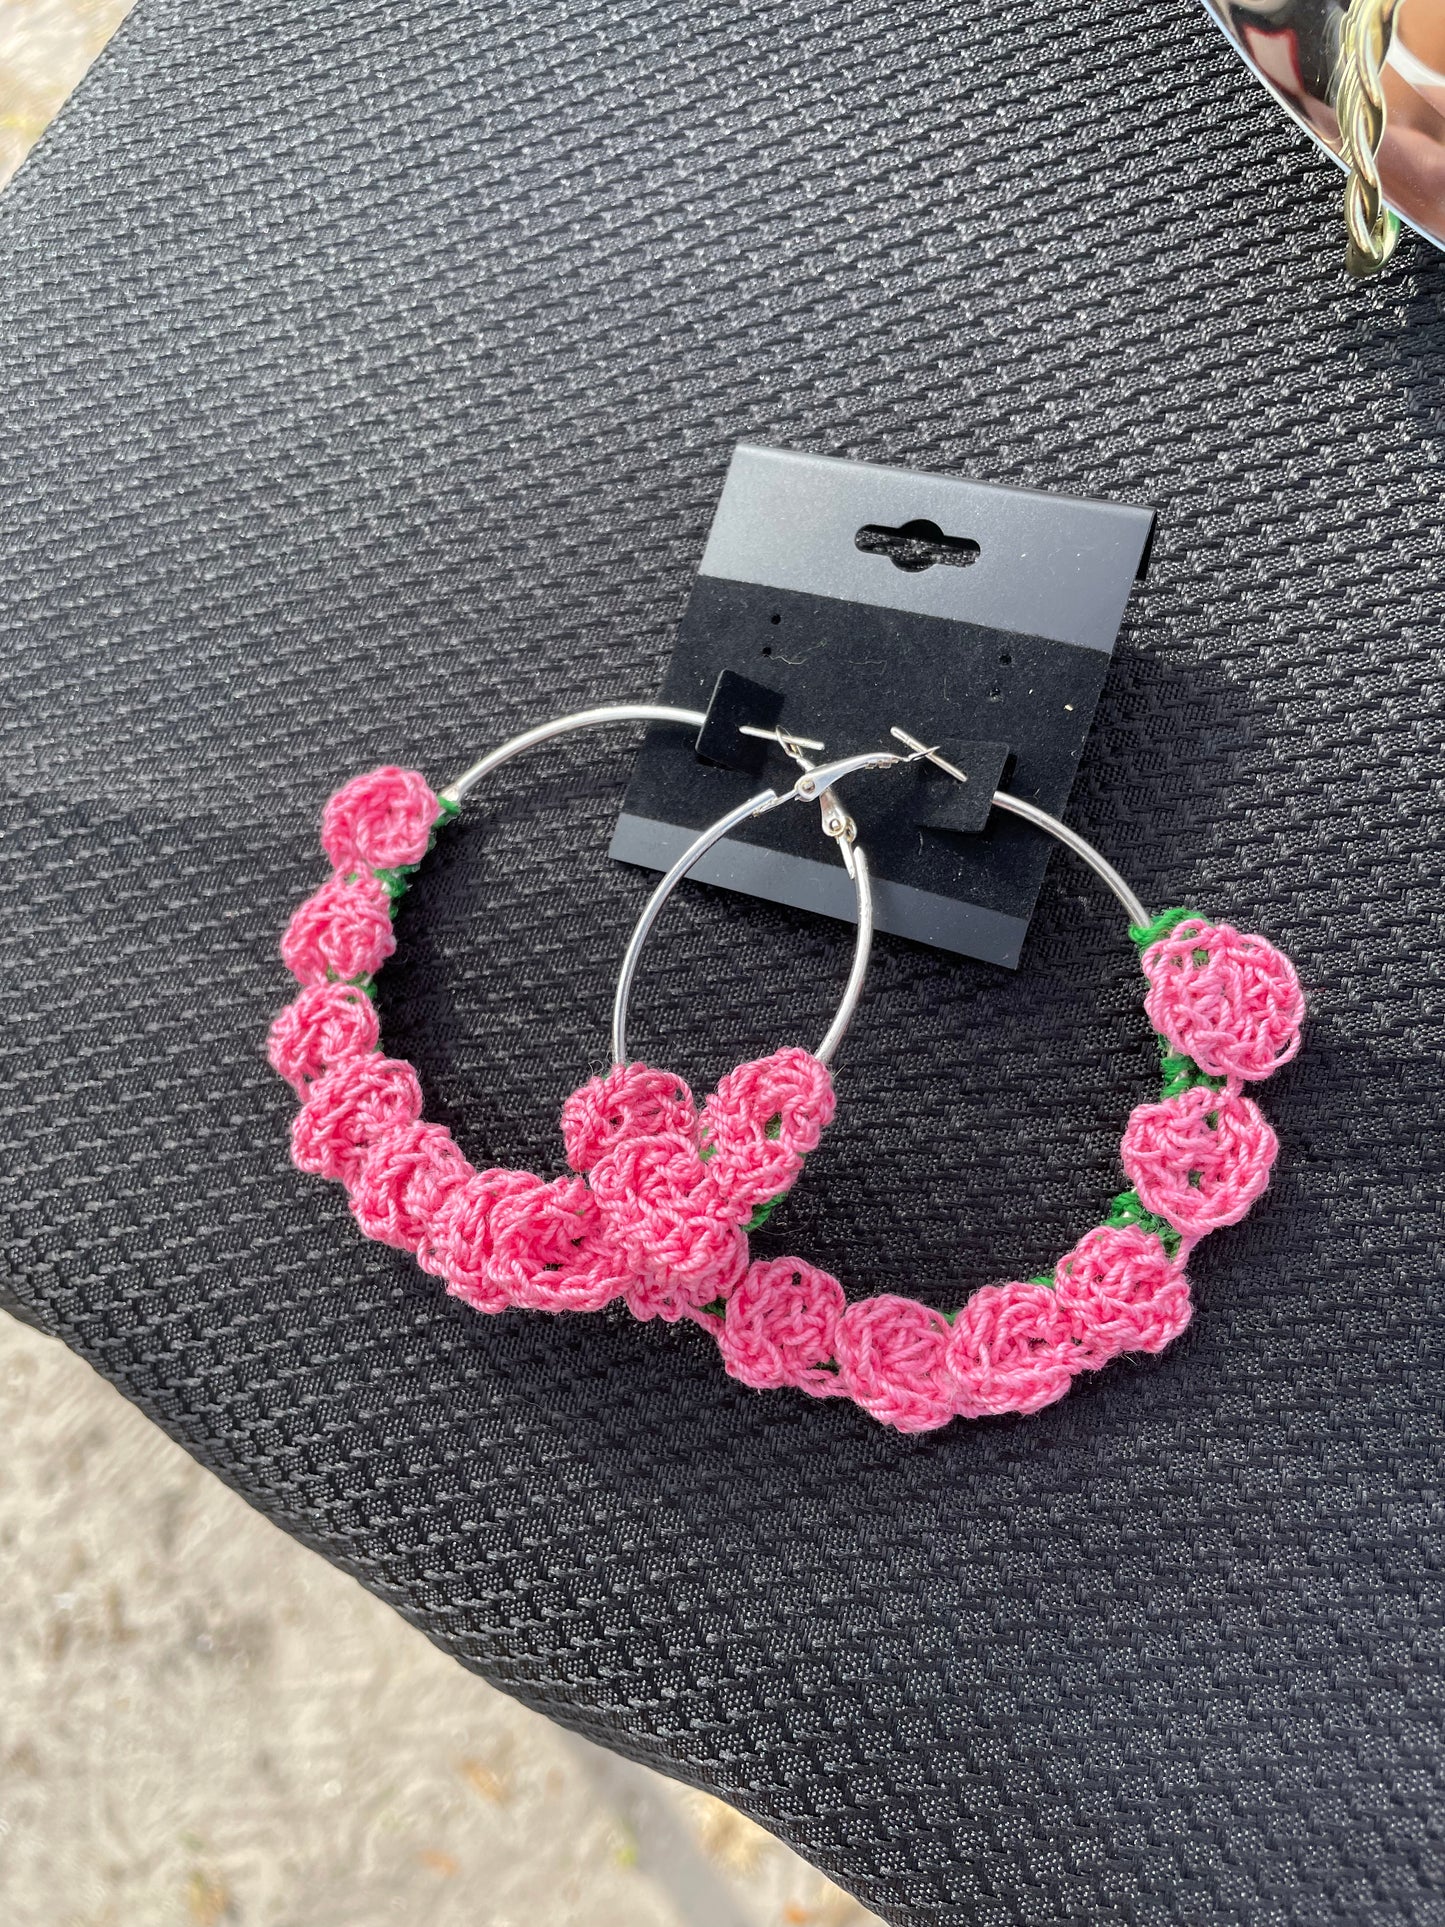 Rose Crochet Earrings